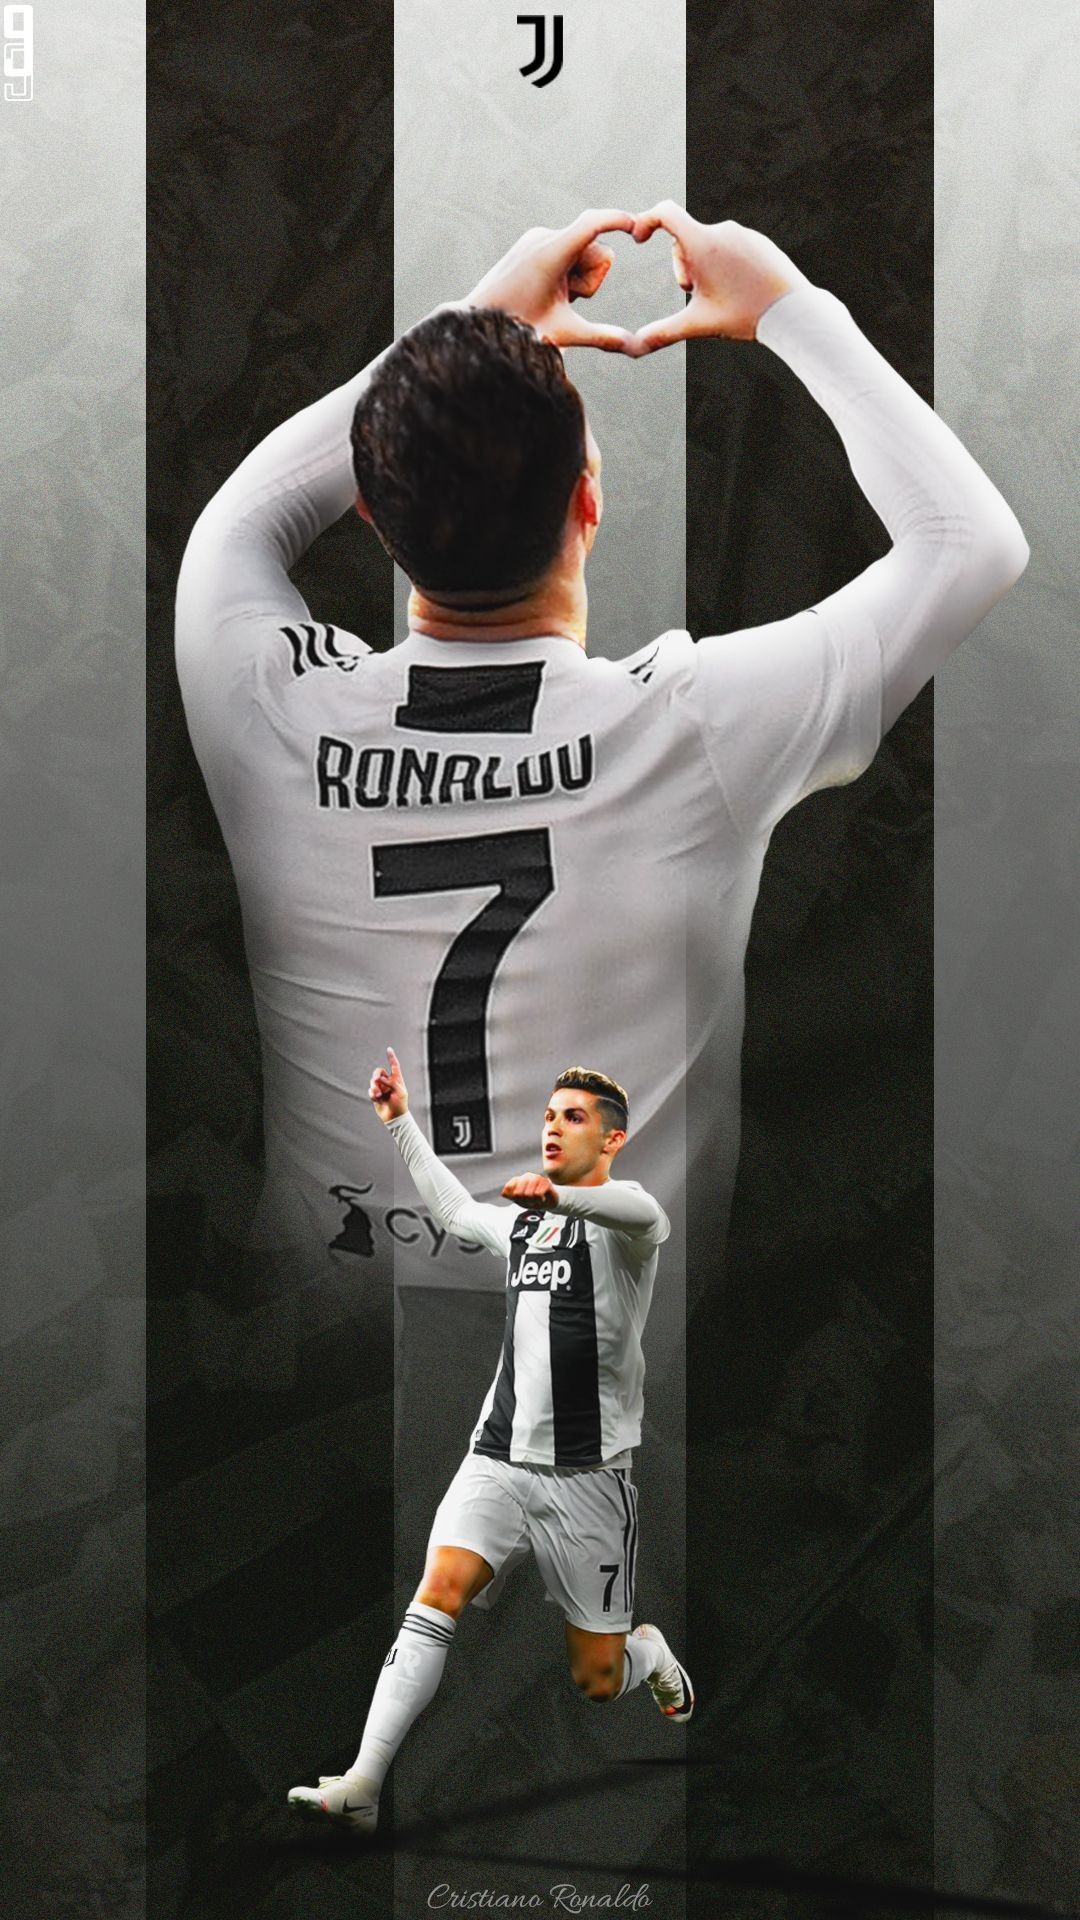 Cristiano Ronaldo Juventus Wallpaper 6. Cristiano ronaldo juventus, Cristiano ronaldo wallpaper, Cristiano ronaldo